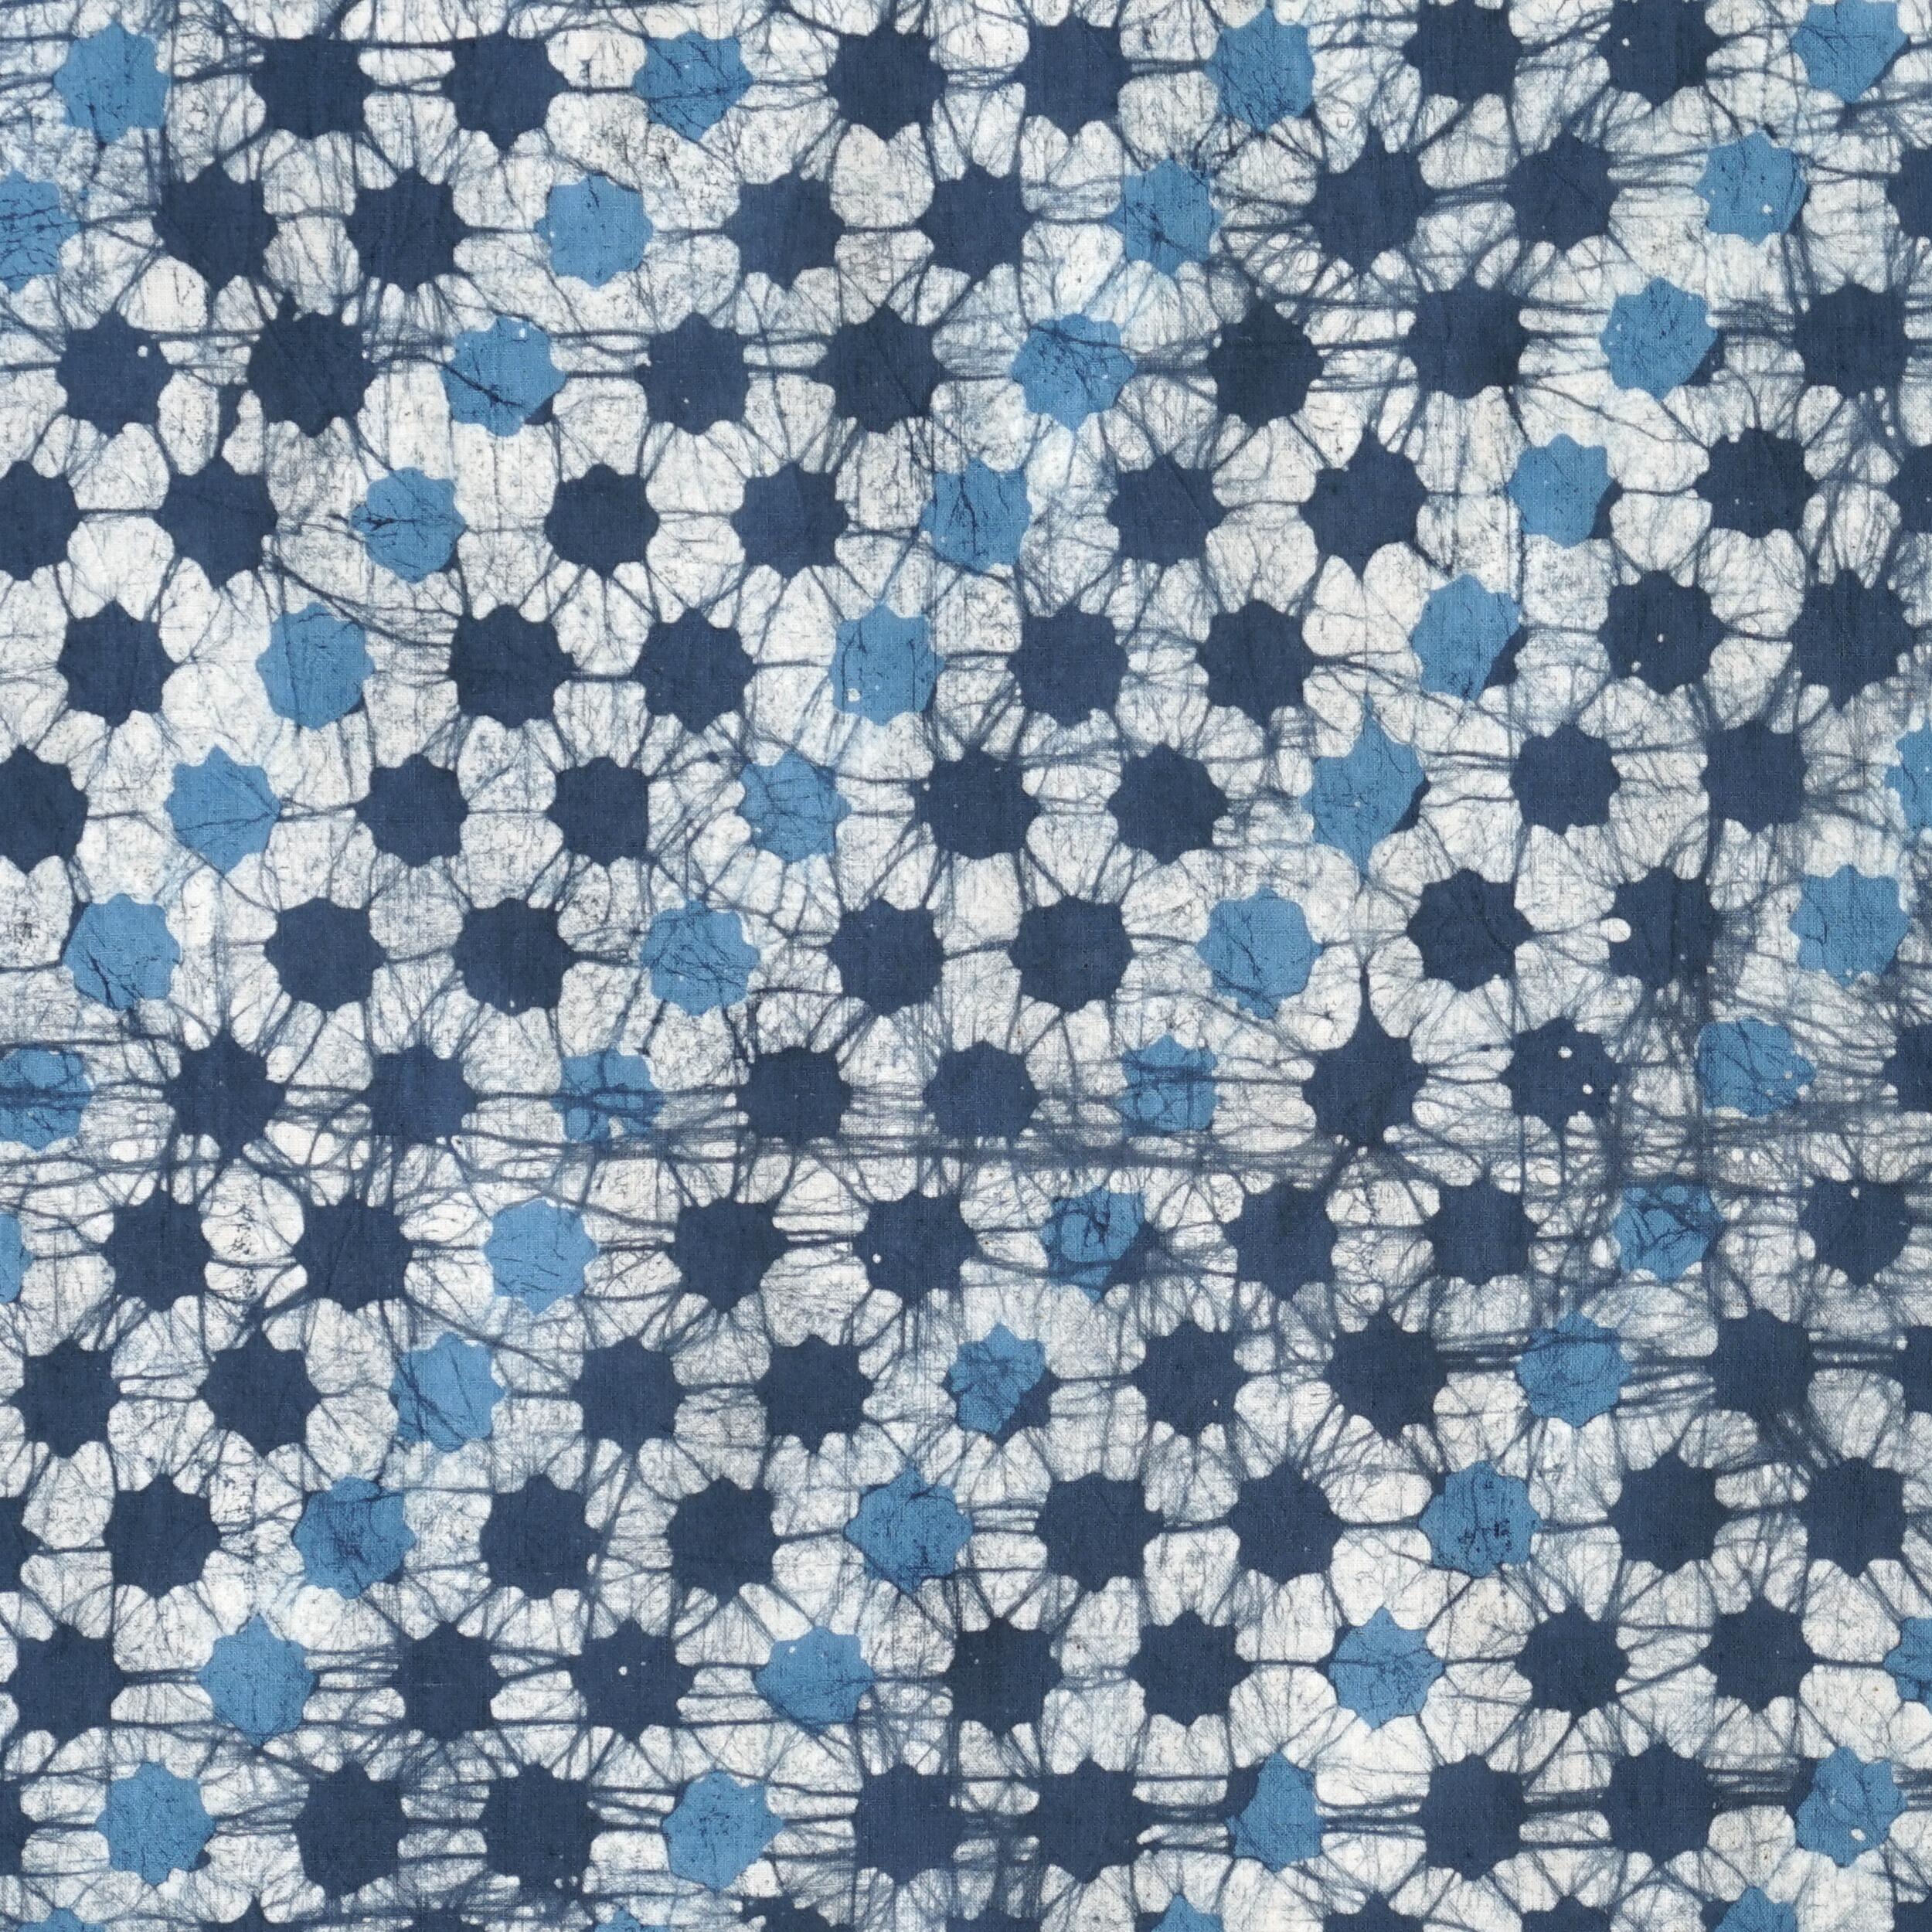 Block-Printed Batik Fabric - Cotton Cloth - Reactive Dyes - Stars Design - Flat